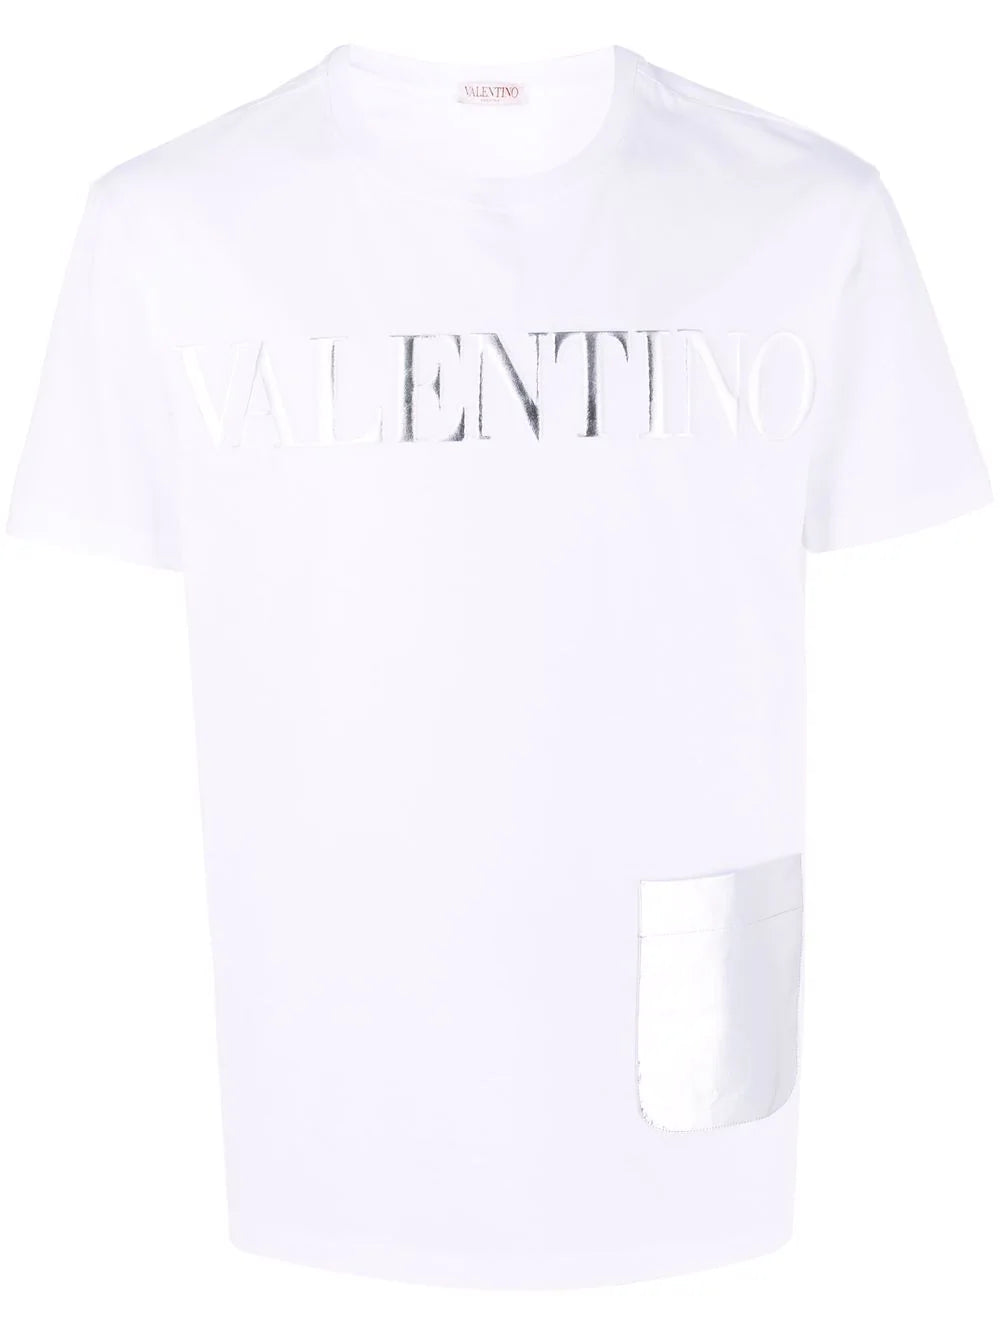 VALENTINO   High-shine logo T-shirt